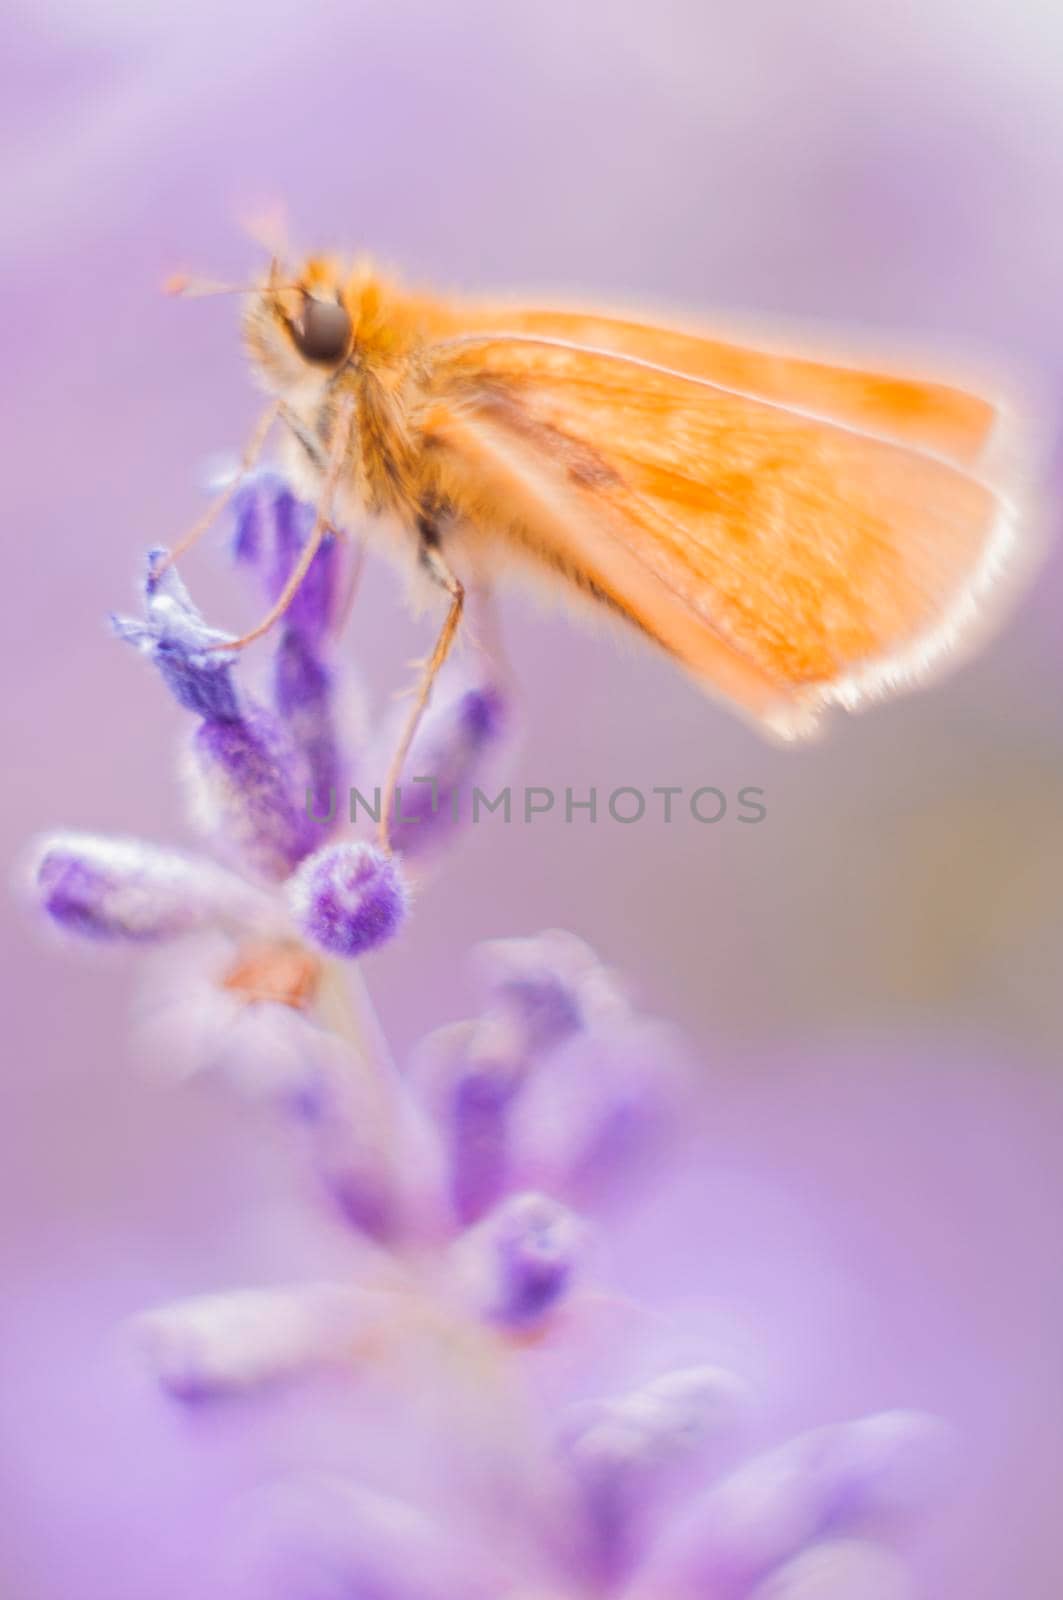 orange moth on purple lavender flower, macro photography natural background by KaterinaDalemans